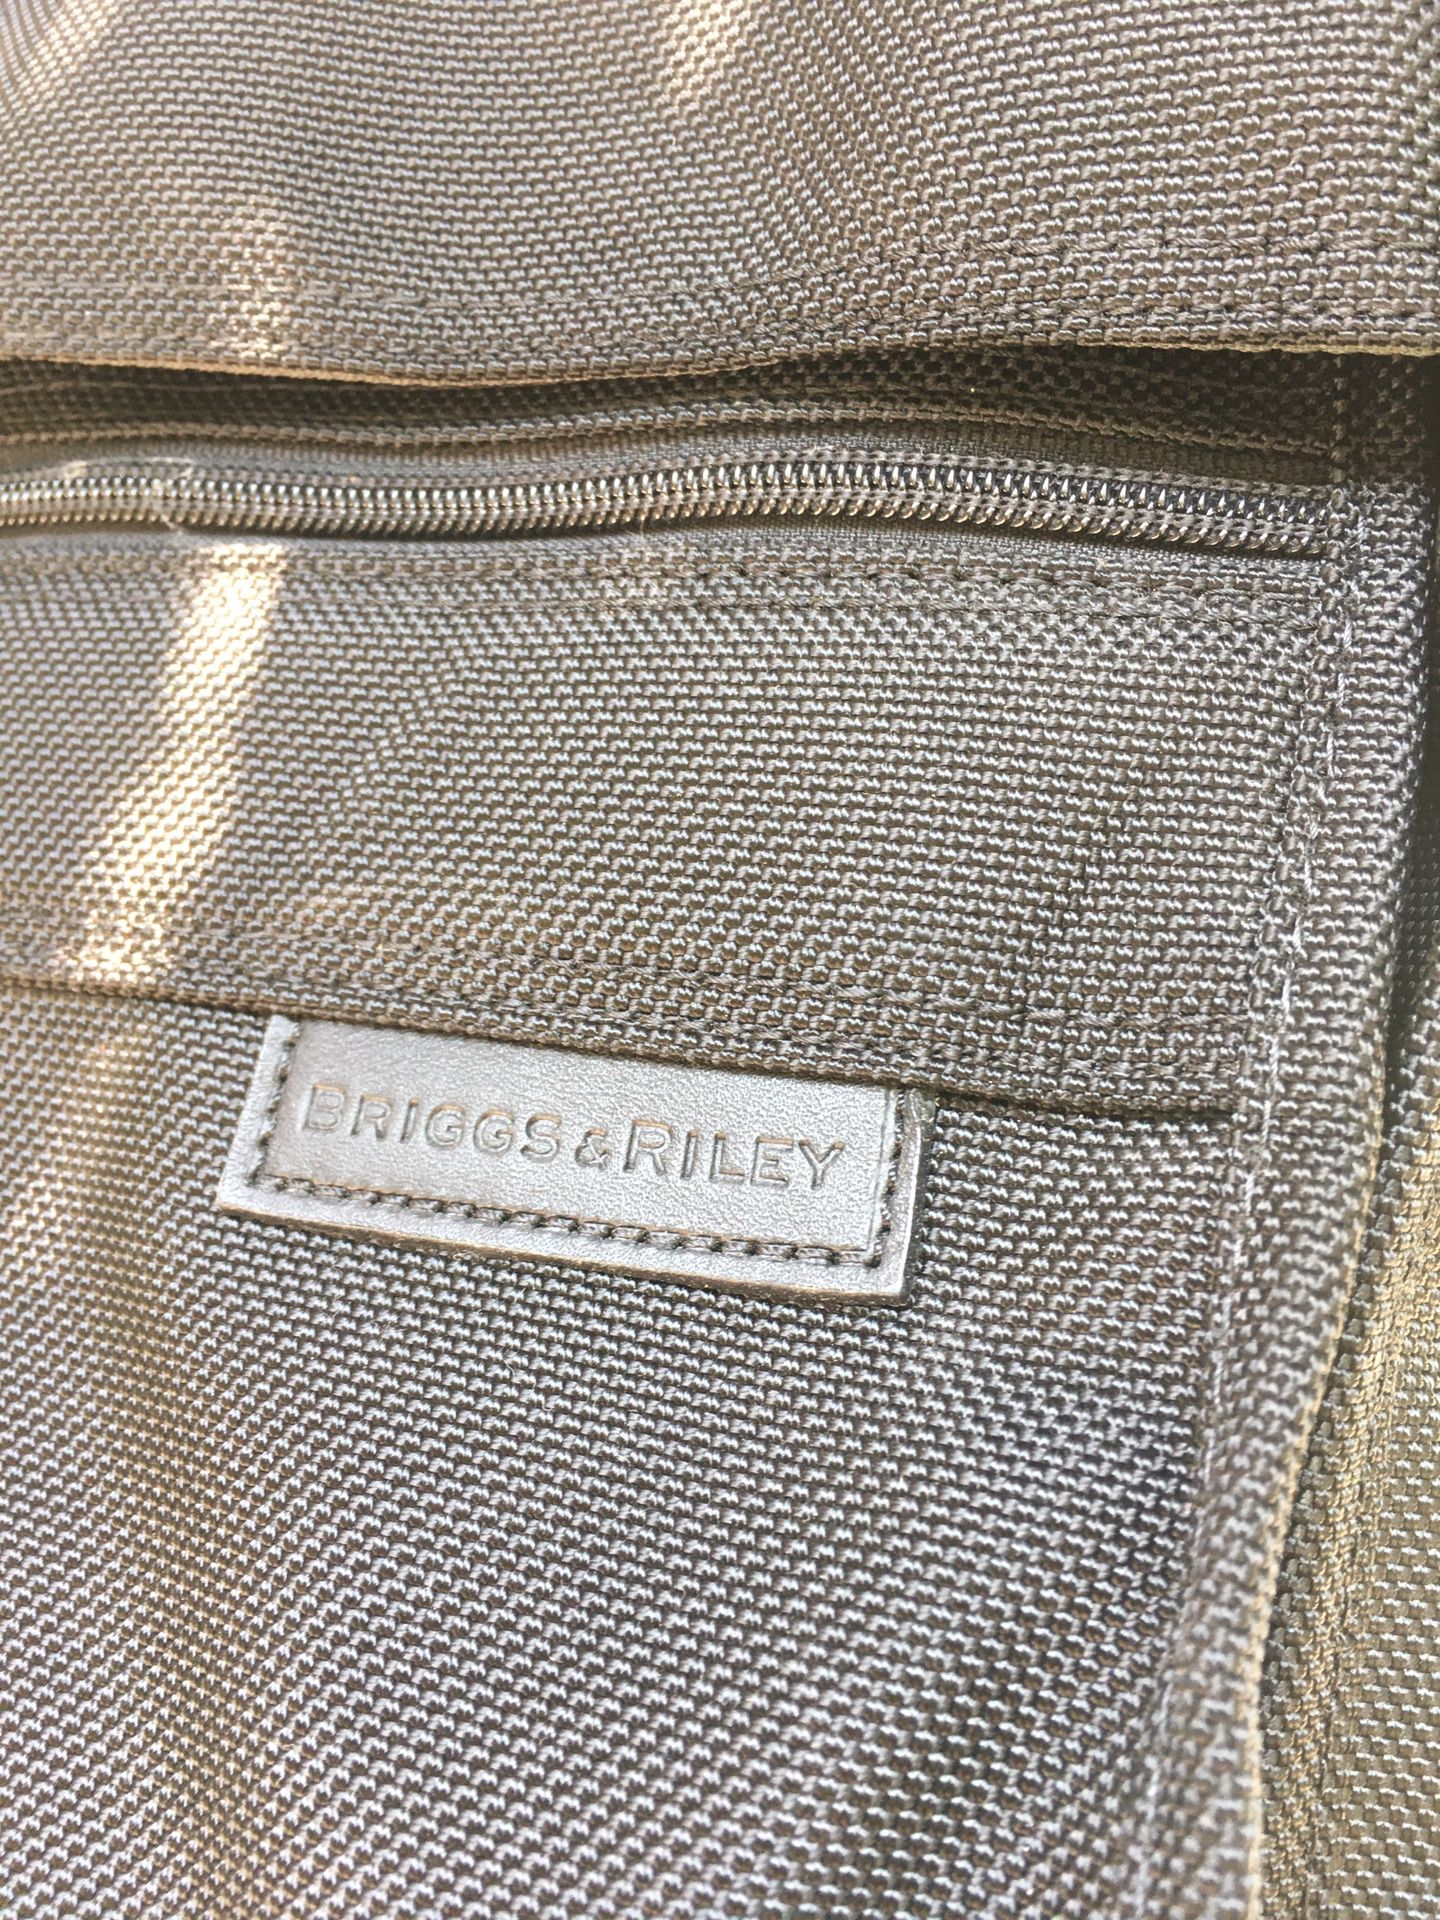 Briggs & Riley business travel garment bag / like new / clean